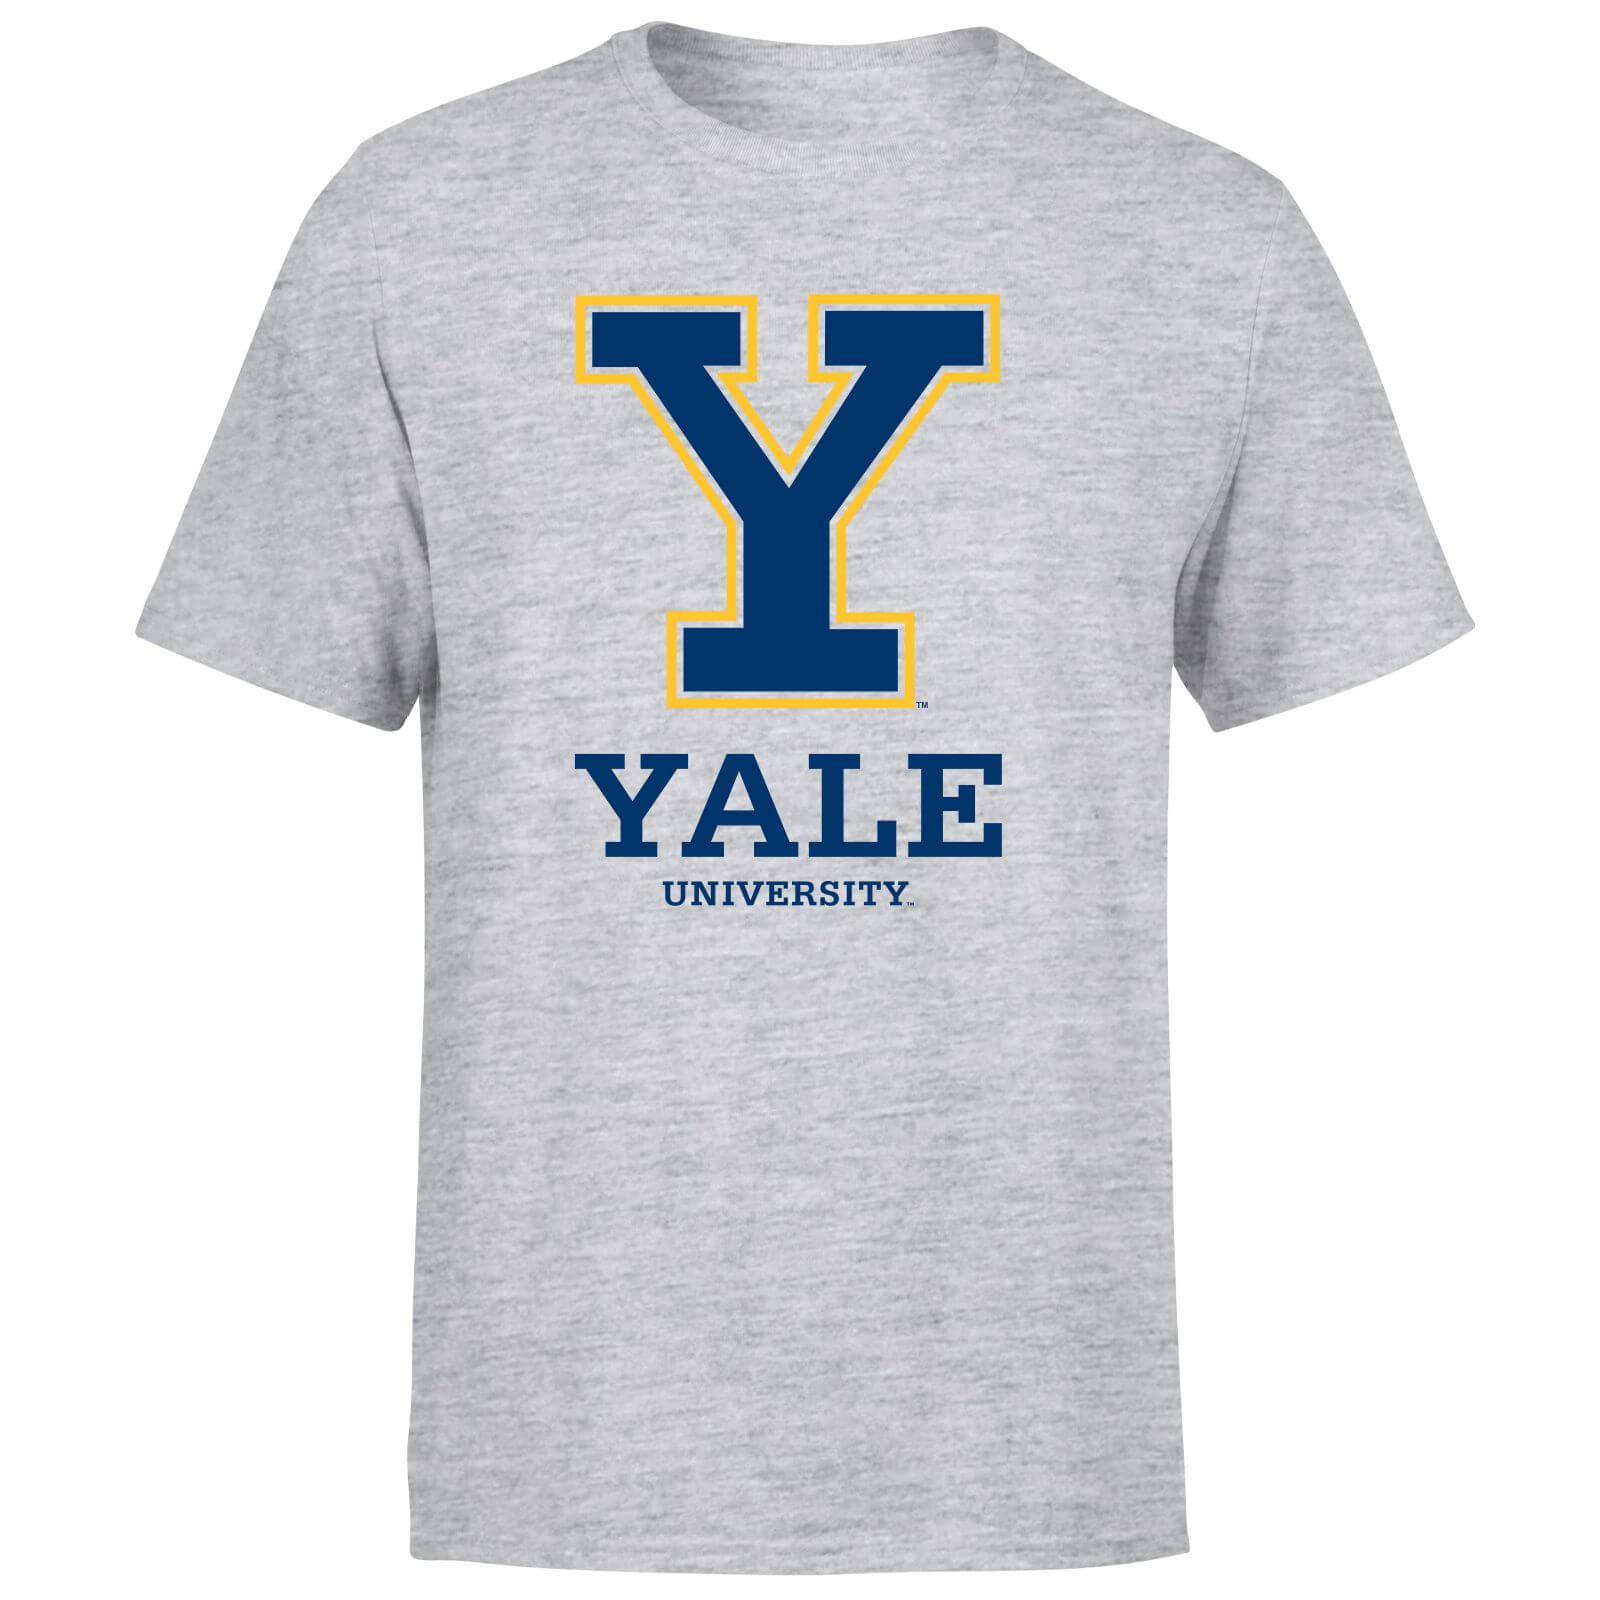 Yale Gray Tee Men's T-Shirt - Grey - Xs - Grijs